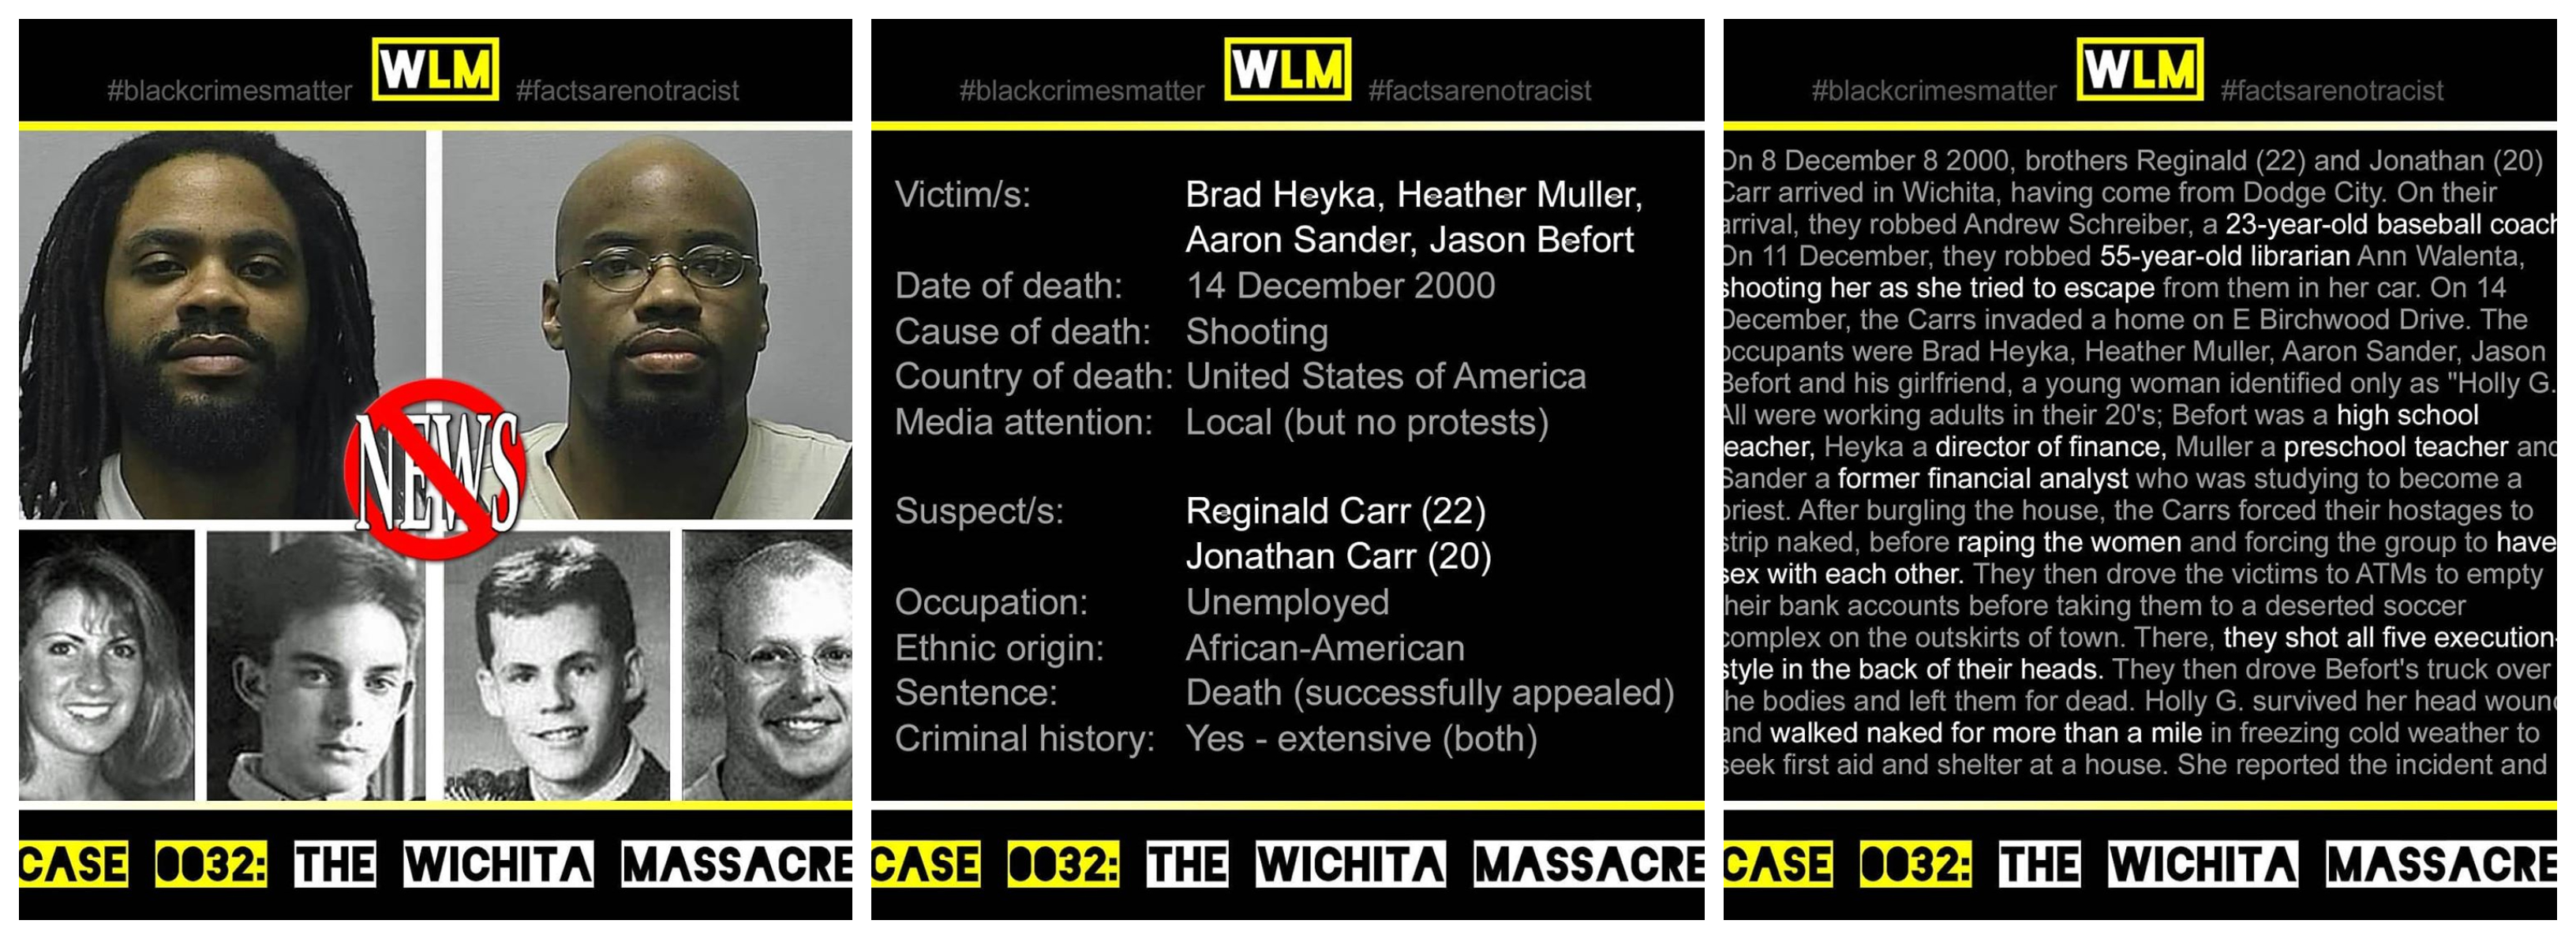 case-032-wichita-massacre